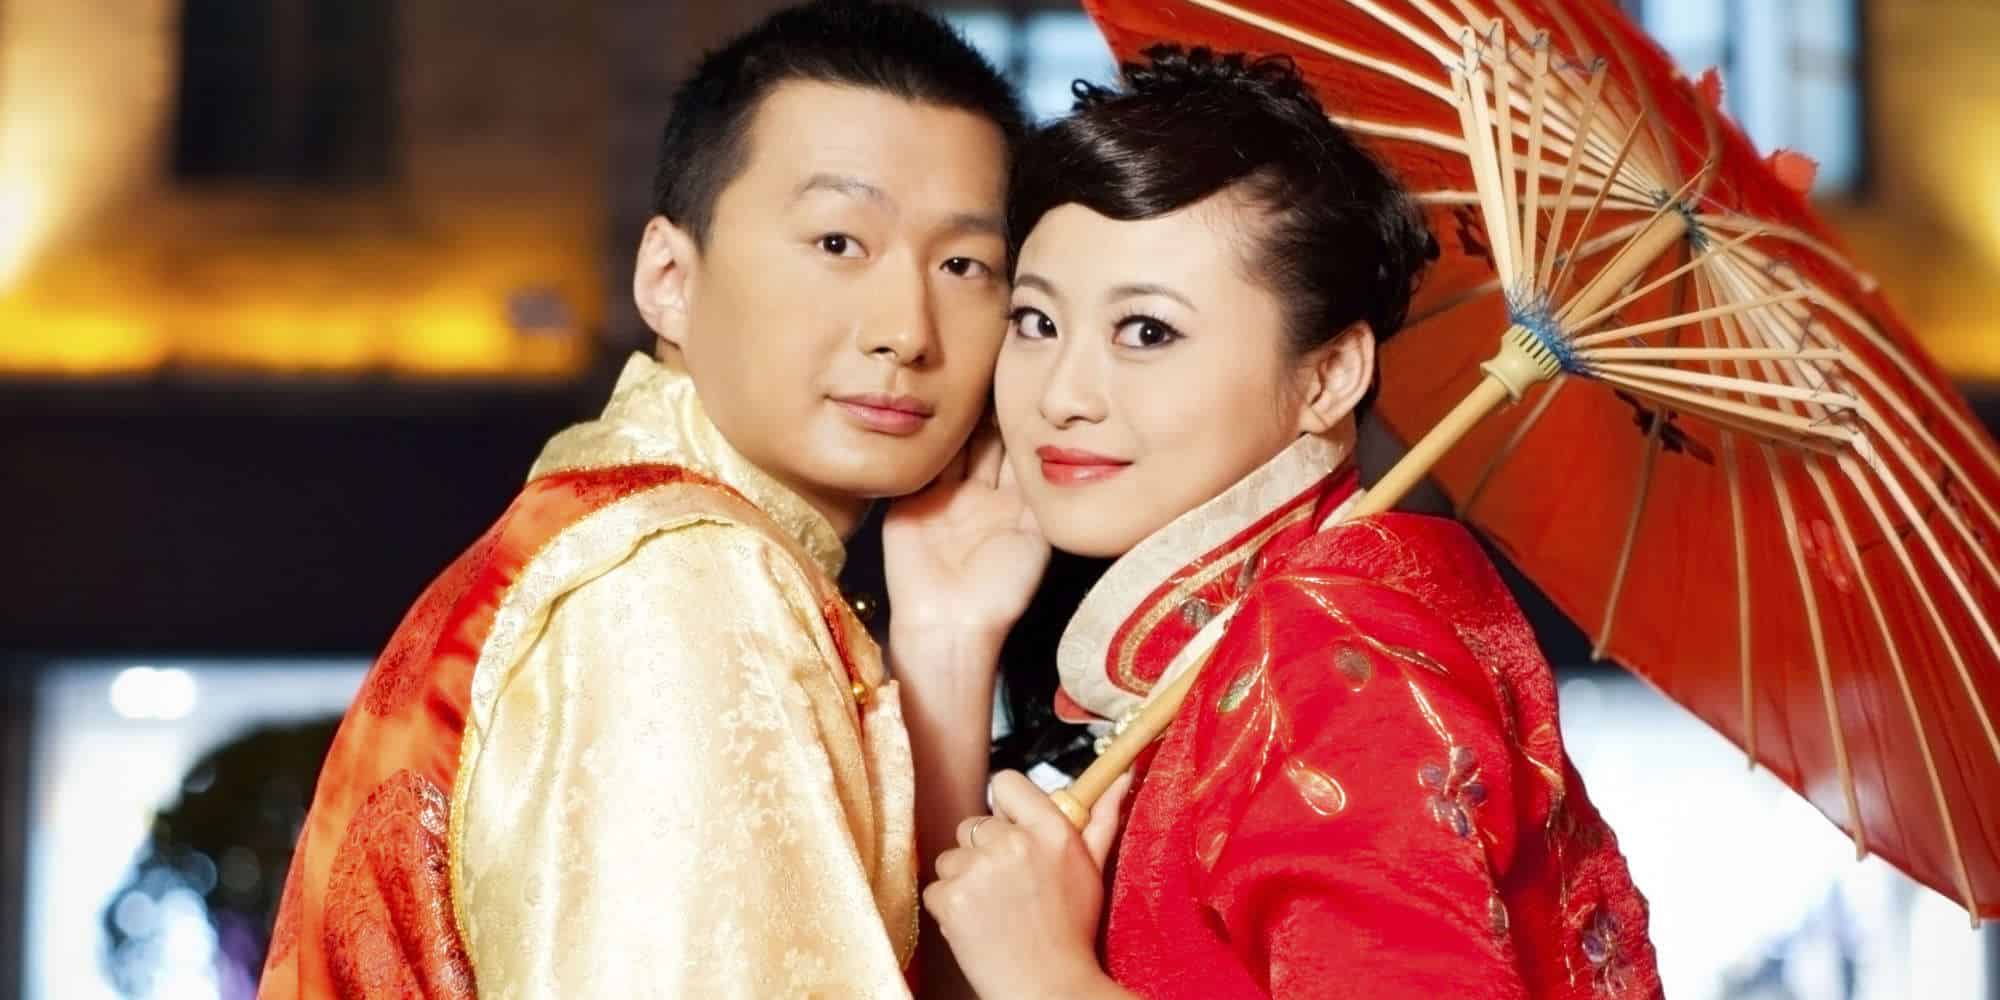 Asian traditional wedding